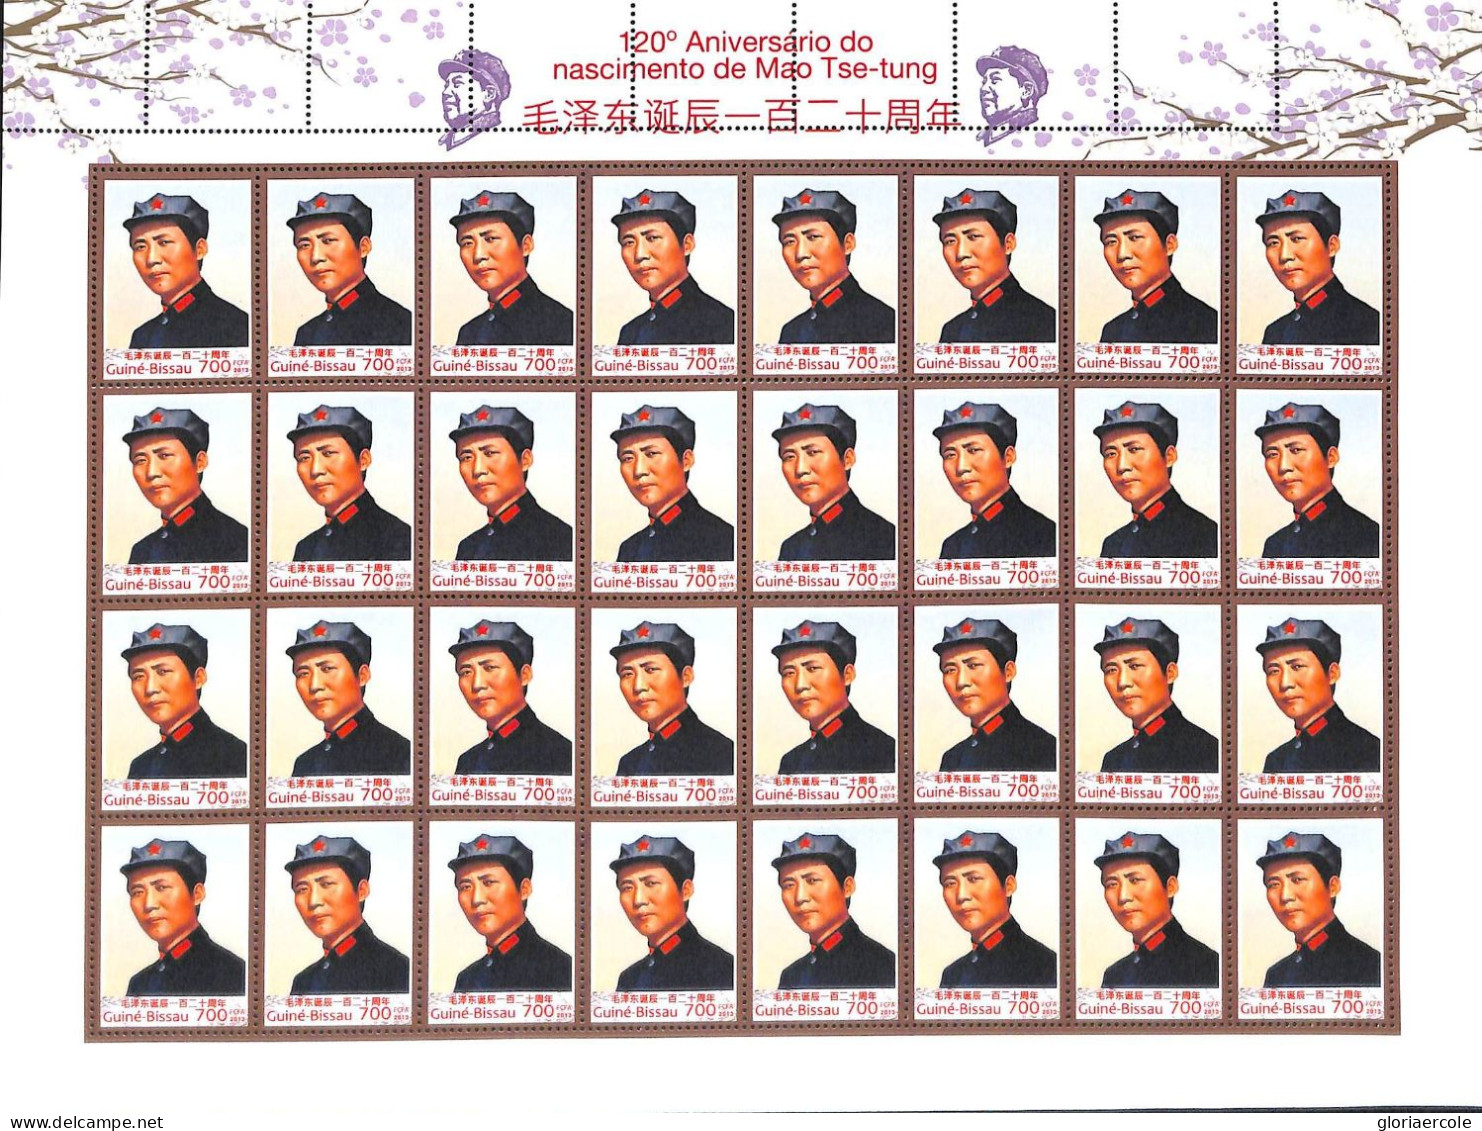 A7546 - GUINE BISSAU - ERROR MISPERF Stamp Sheet - 2013 - Mao Tse-Tung - Mao Tse-Tung